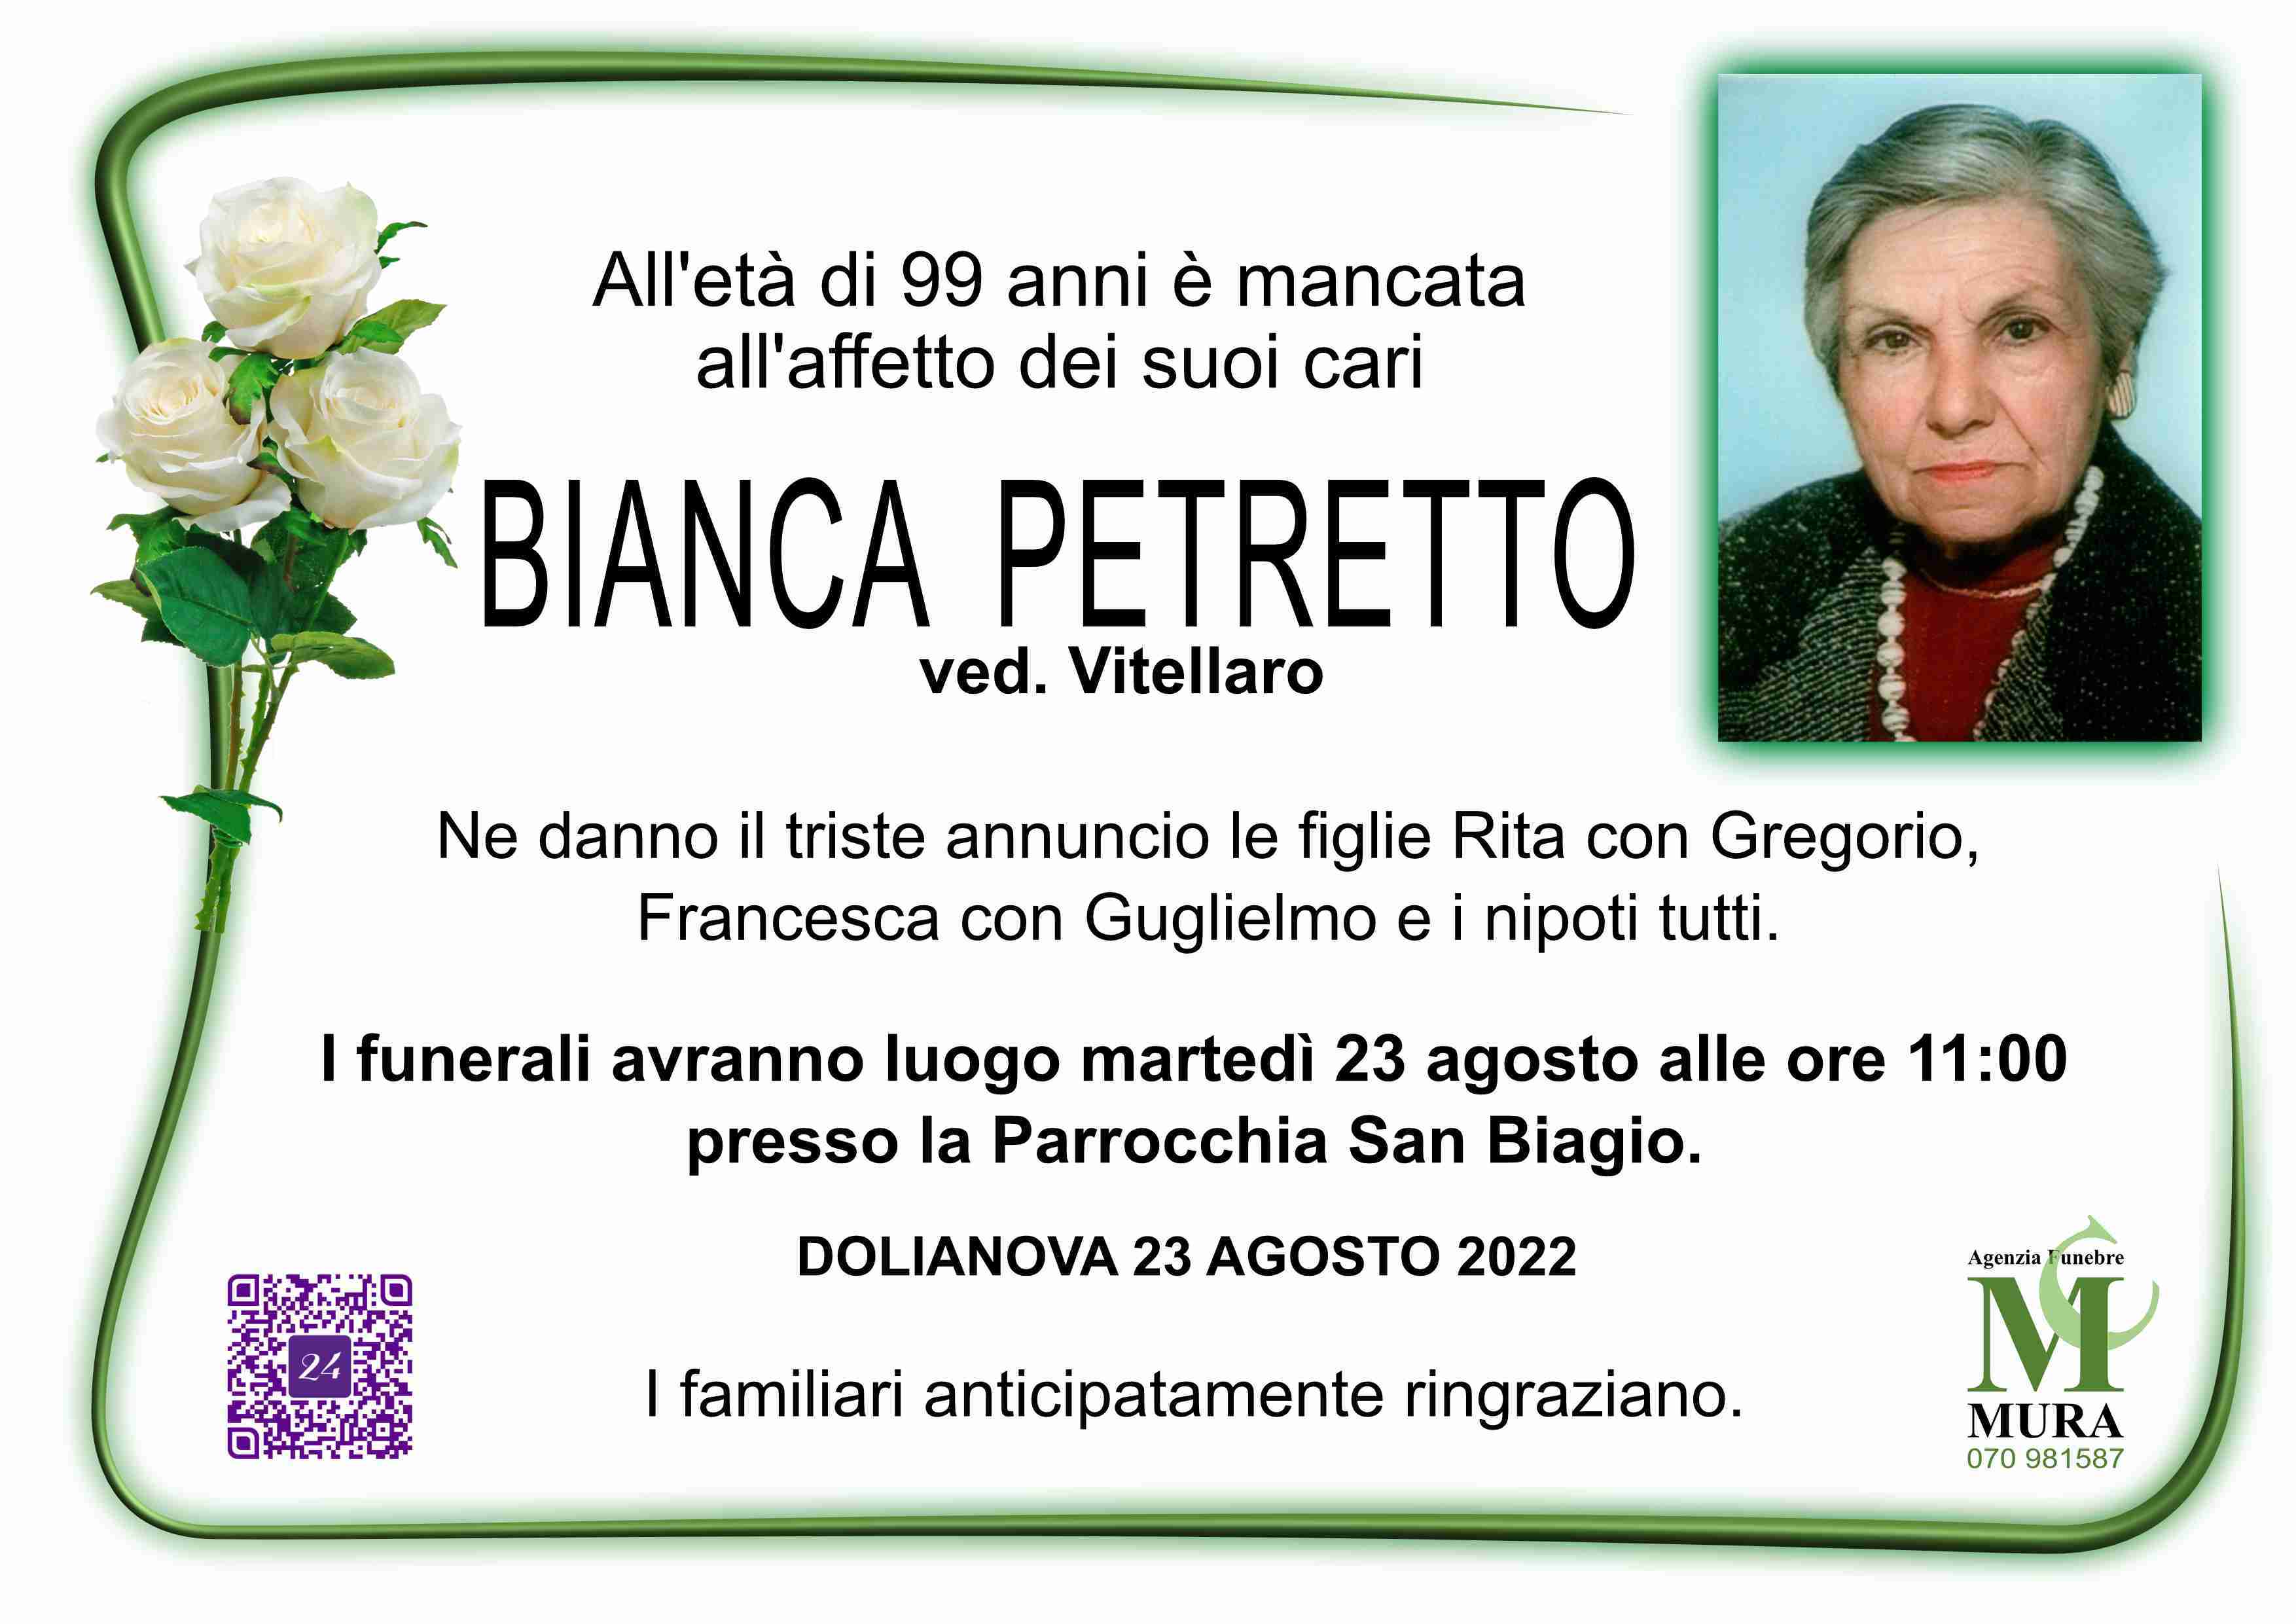 Bianca Petretto